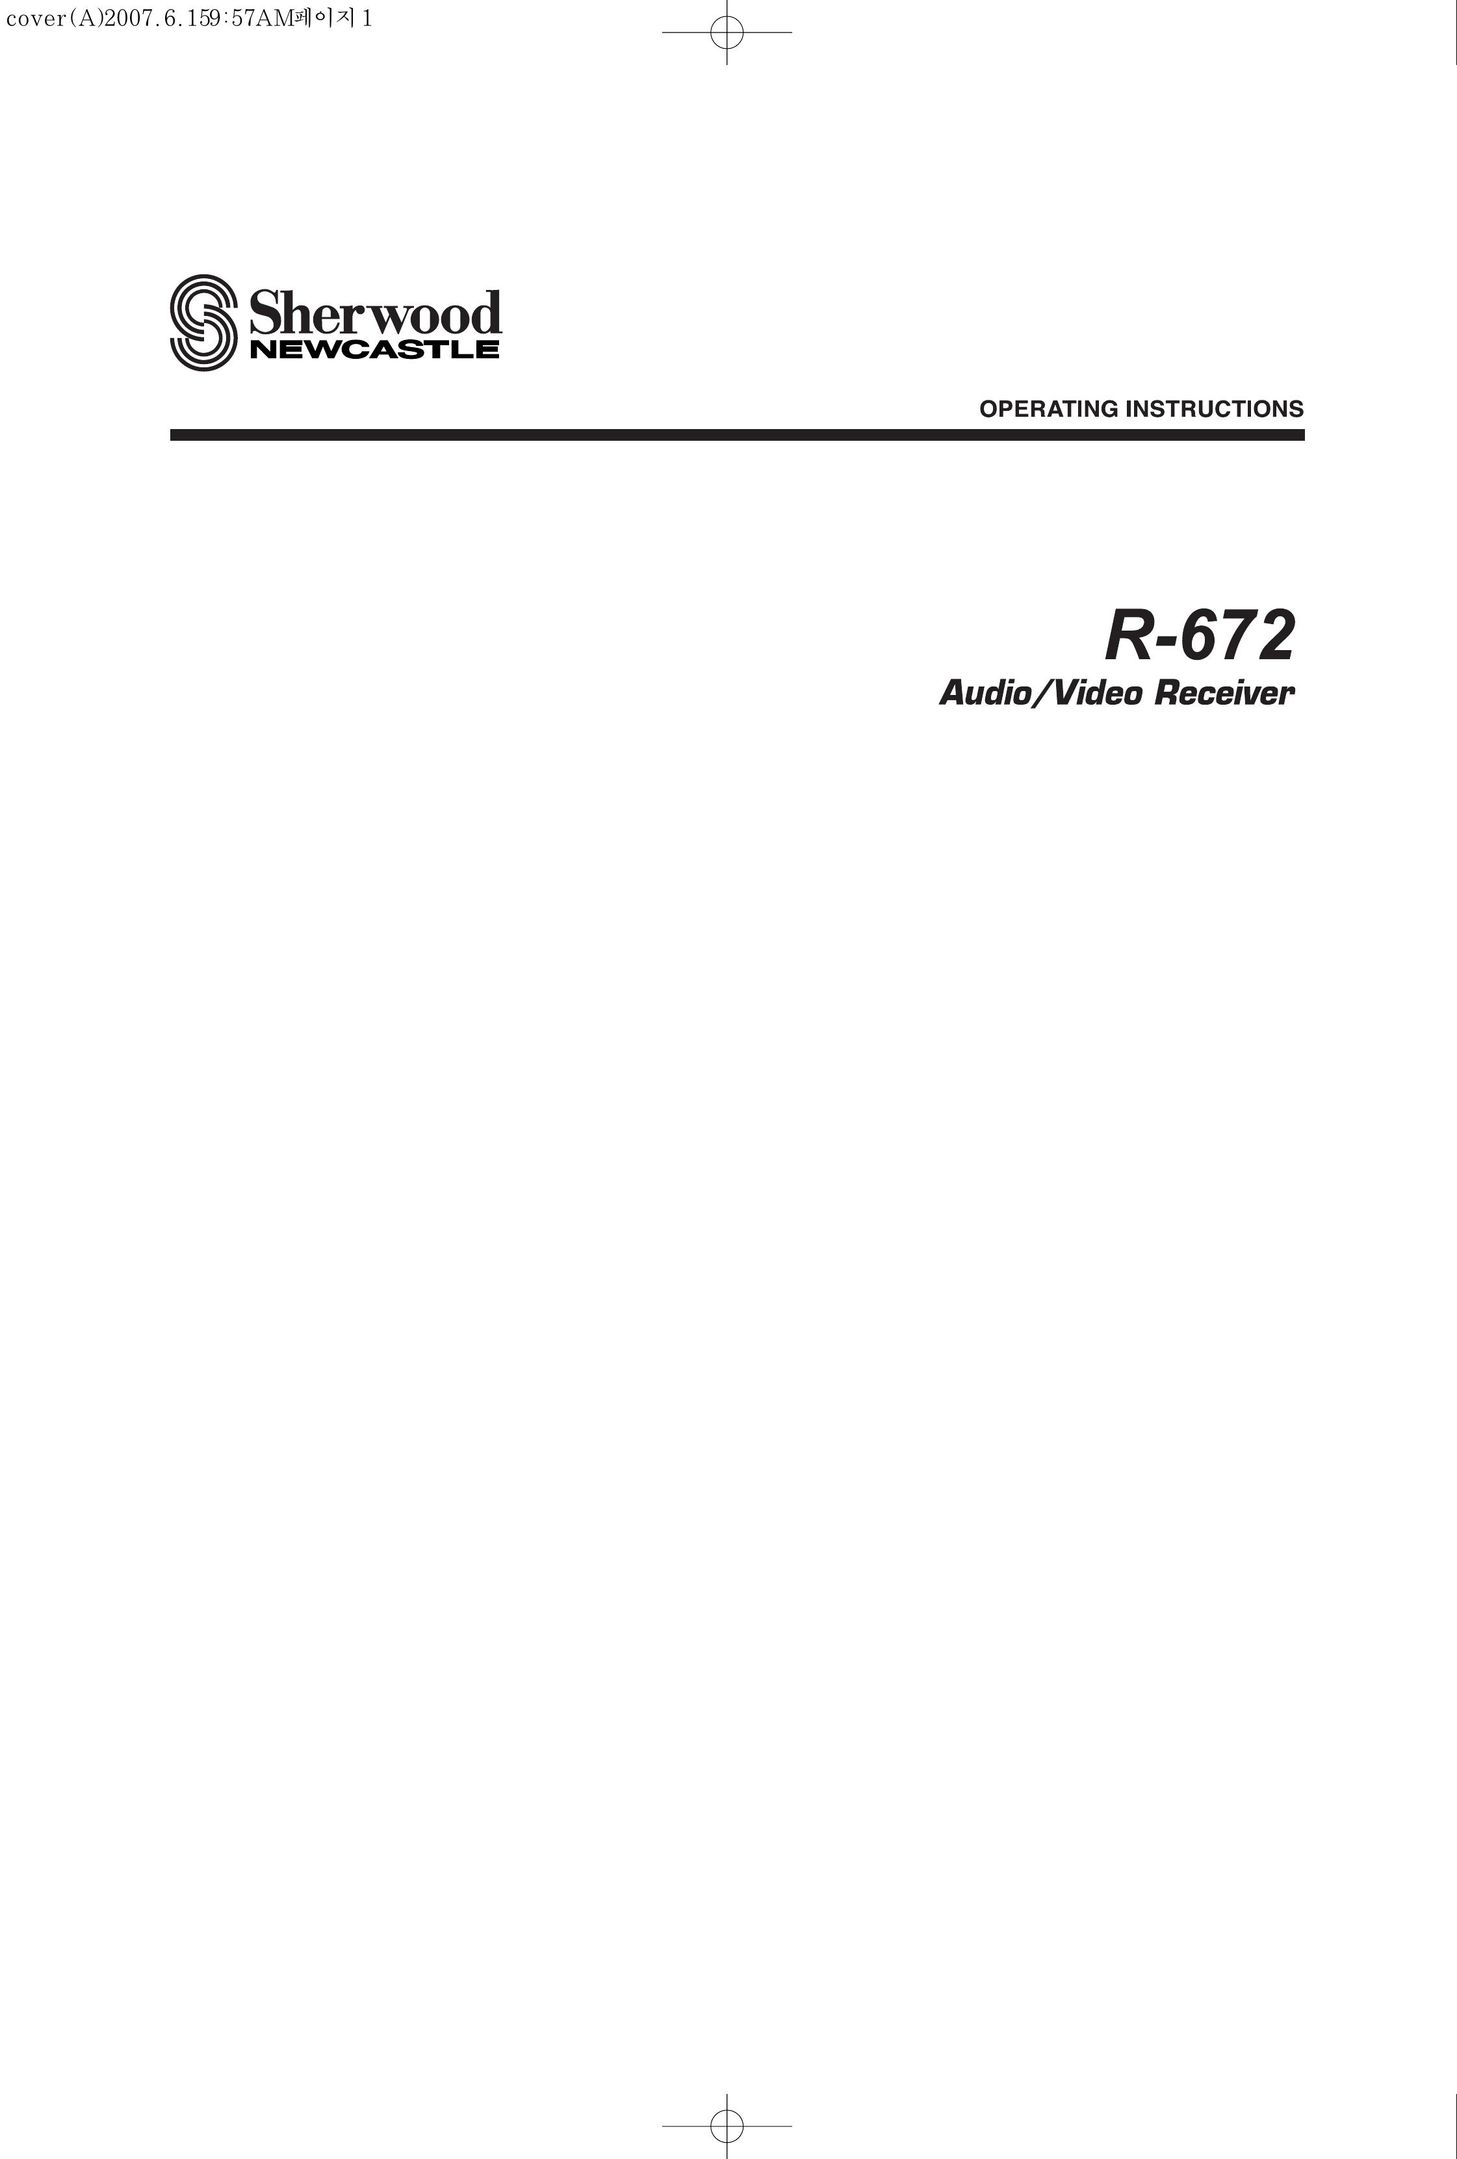 XM Satellite Radio R-672 Stereo Receiver User Manual